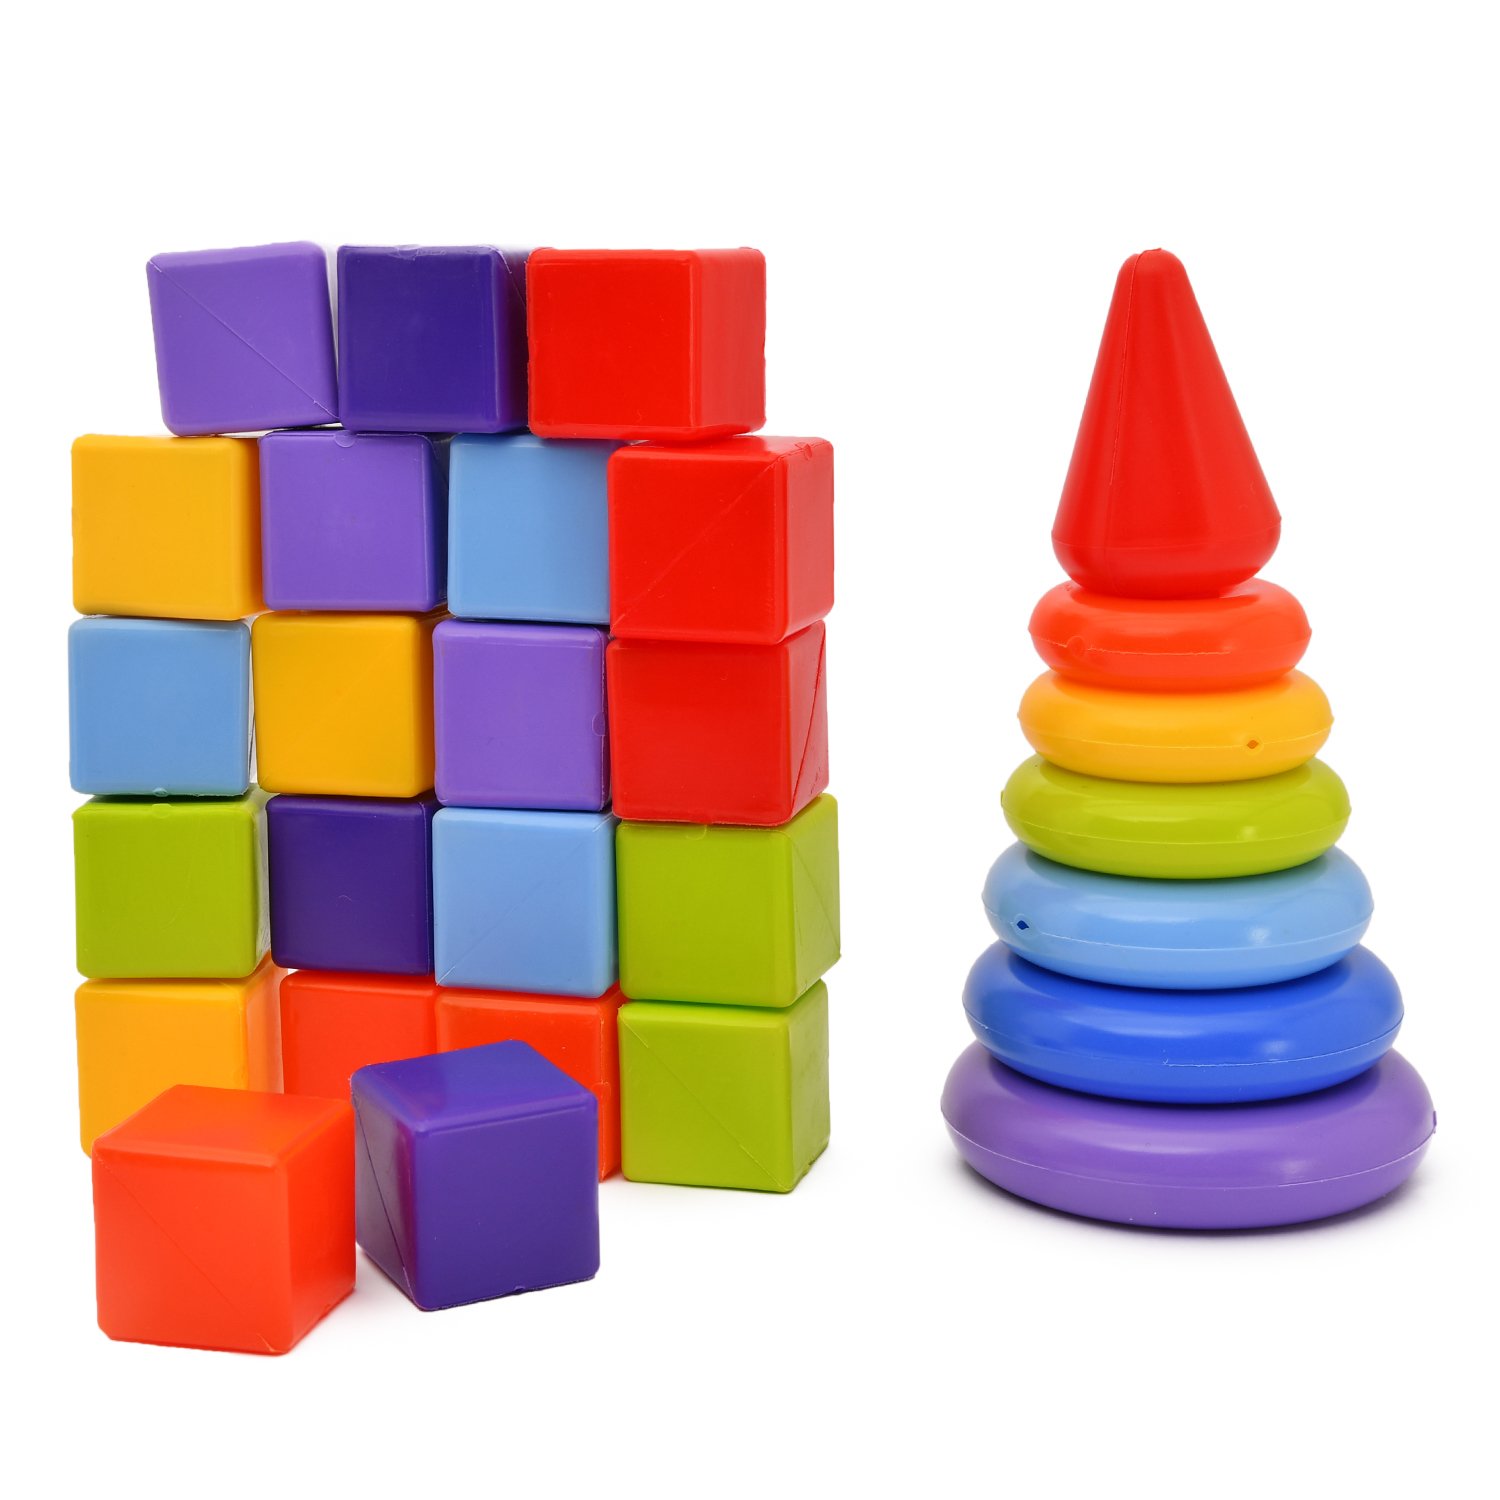 Набор развивающий Росигрушка ассорти 21 кубик+пирамидка